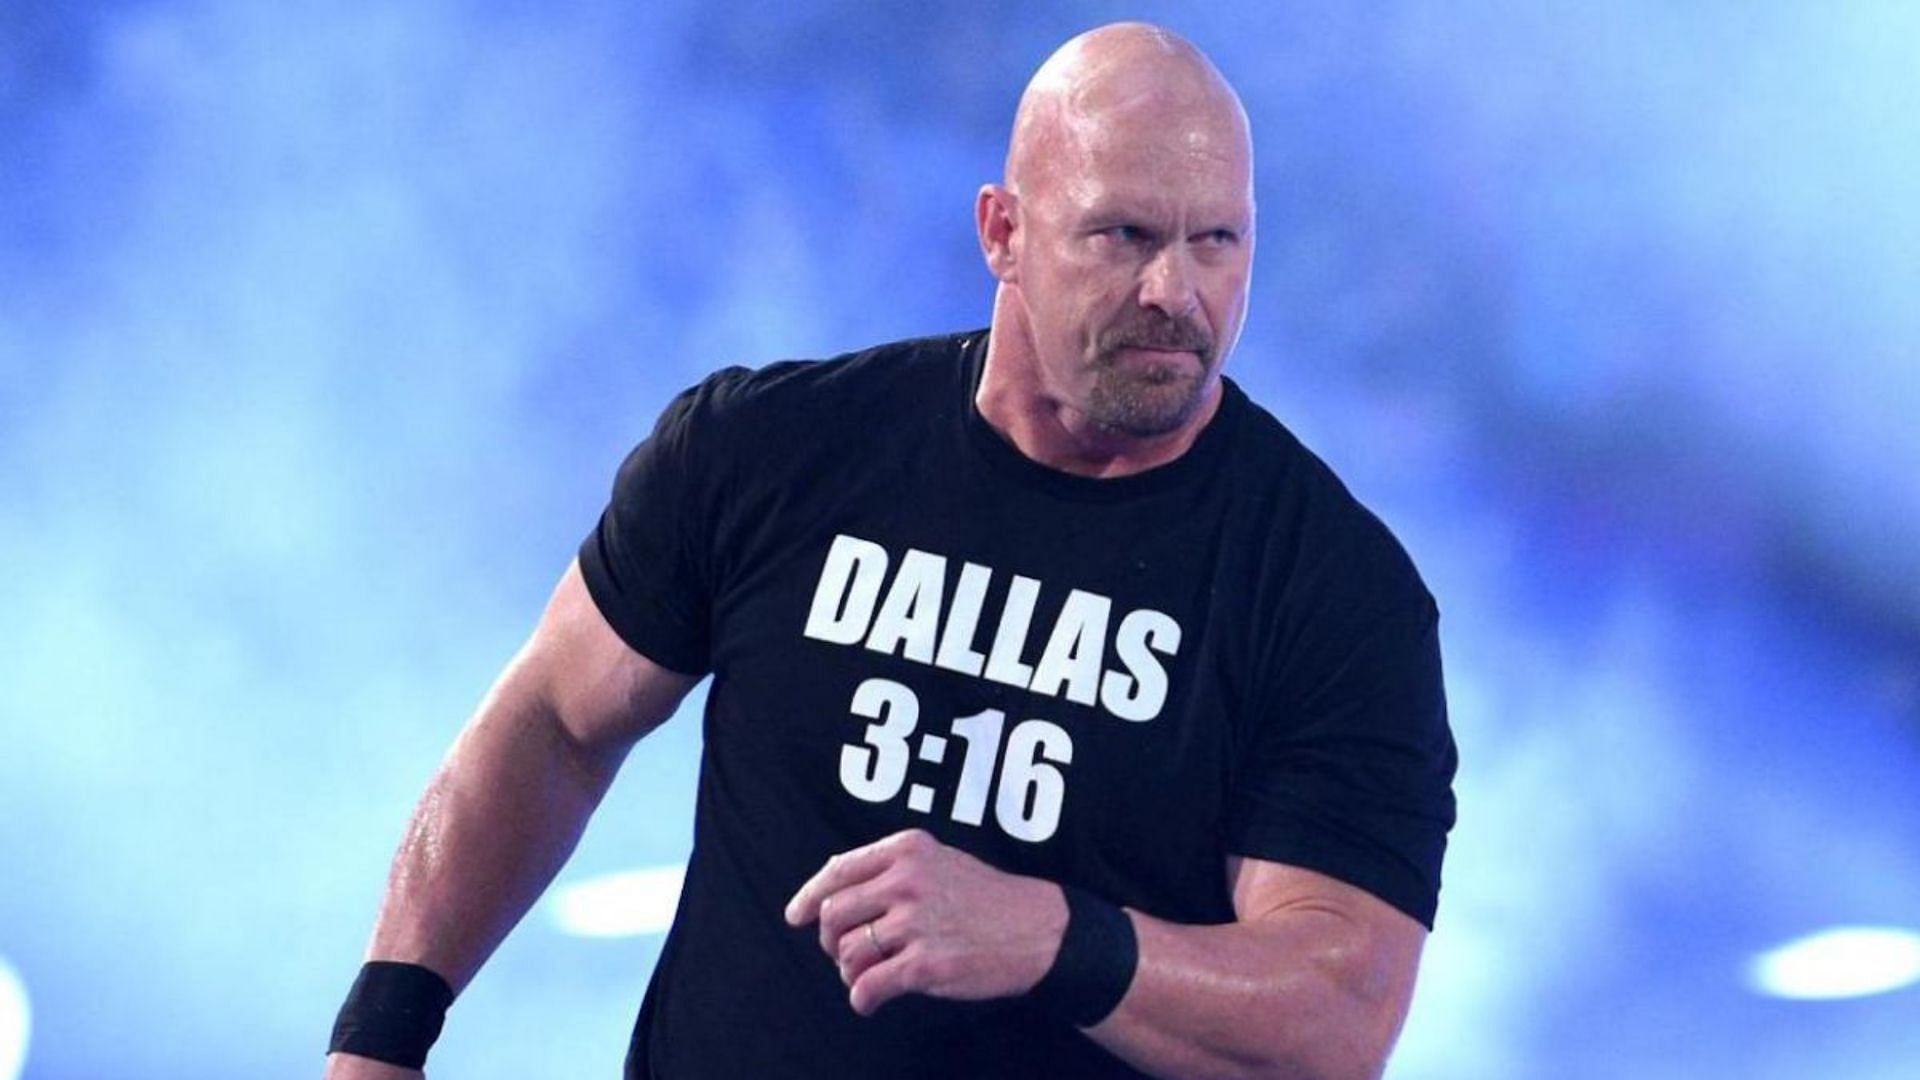 Stone Cold Steve Austin made his WWE return at WrestleMania